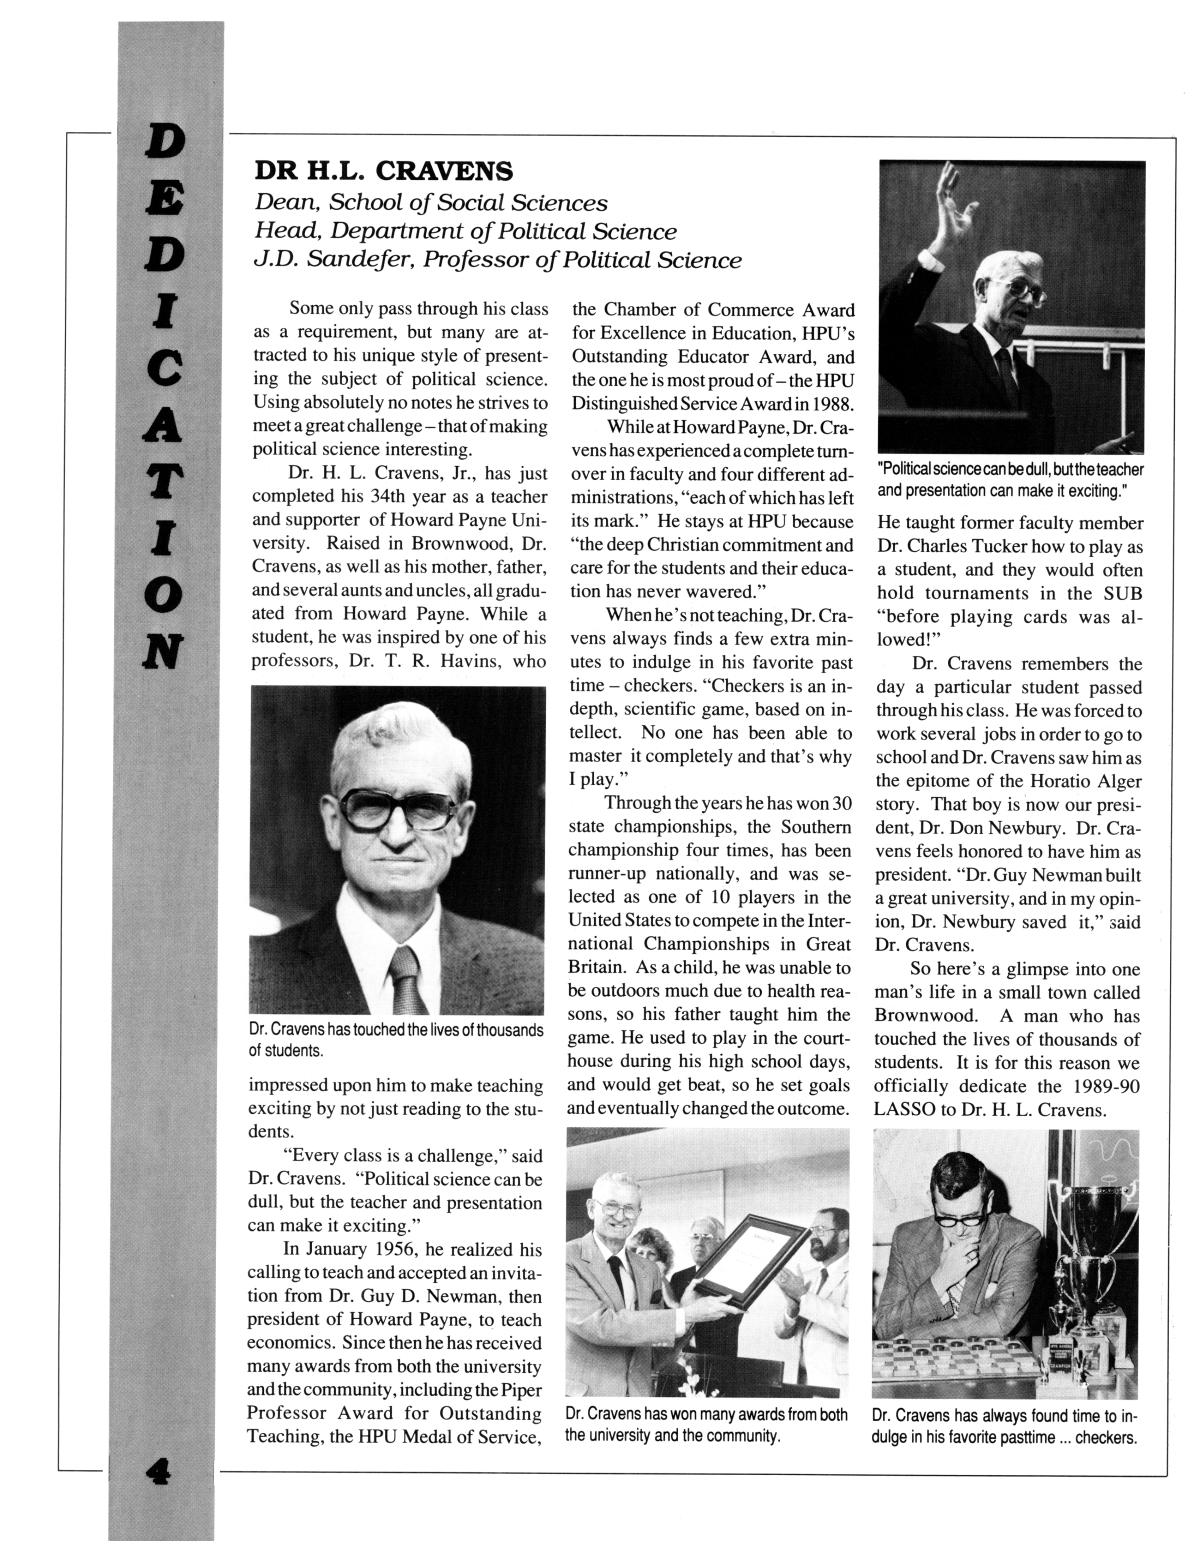 The Lasso, Yearbook of Howard Payne University, 1990
                                                
                                                    4
                                                